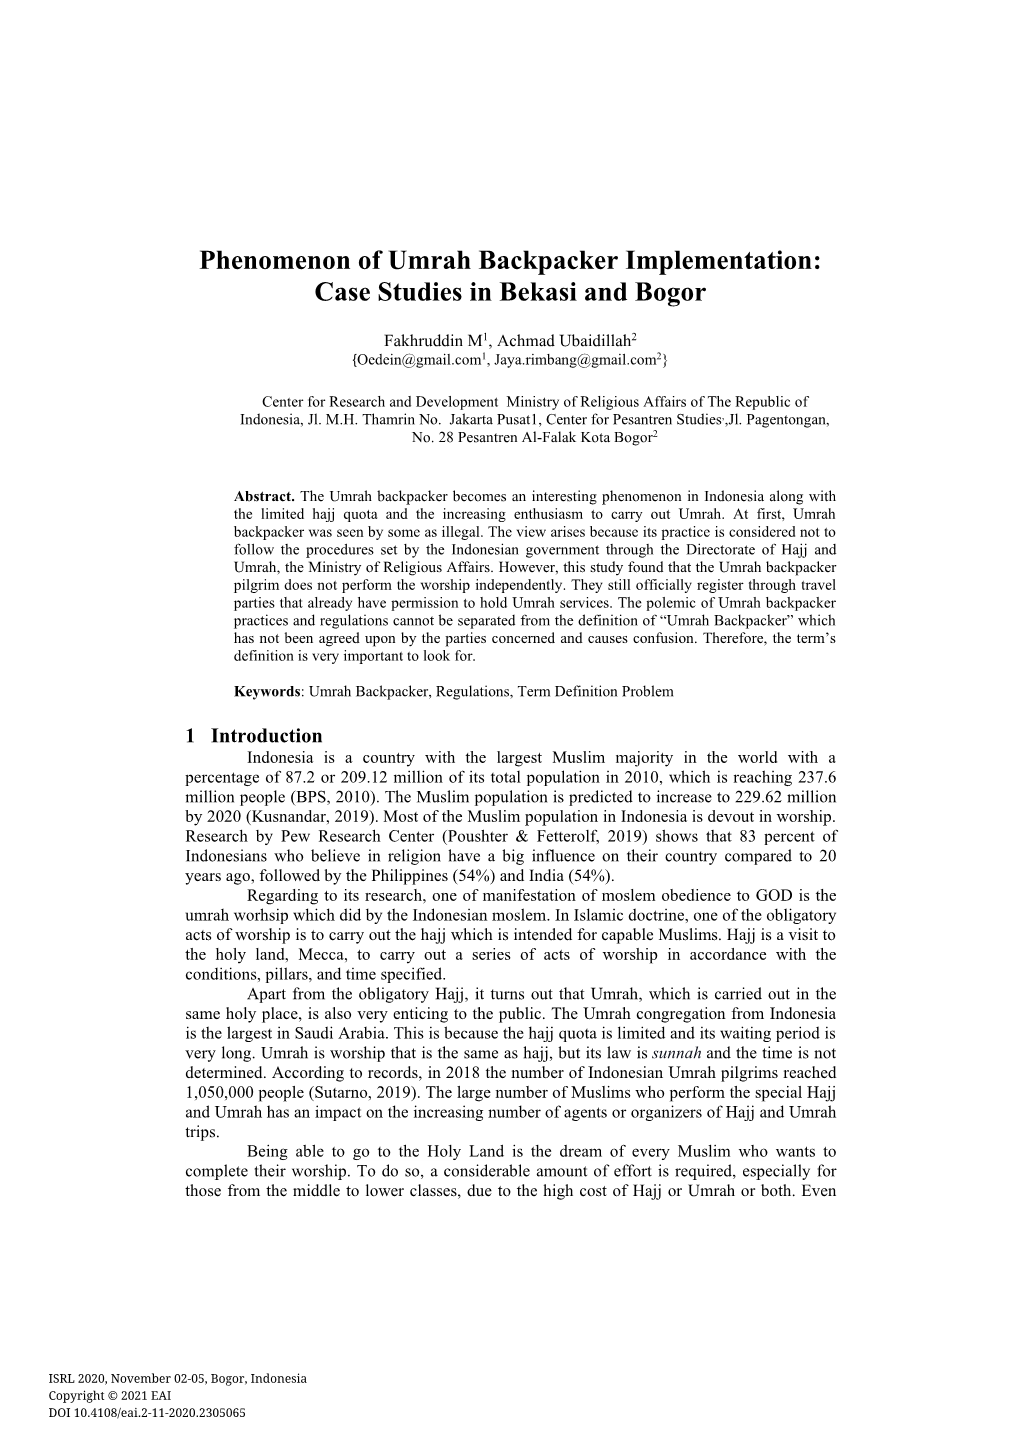 Phenomenon of Umrah Backpacker Implementation: Case Studies in Bekasi and Bogor